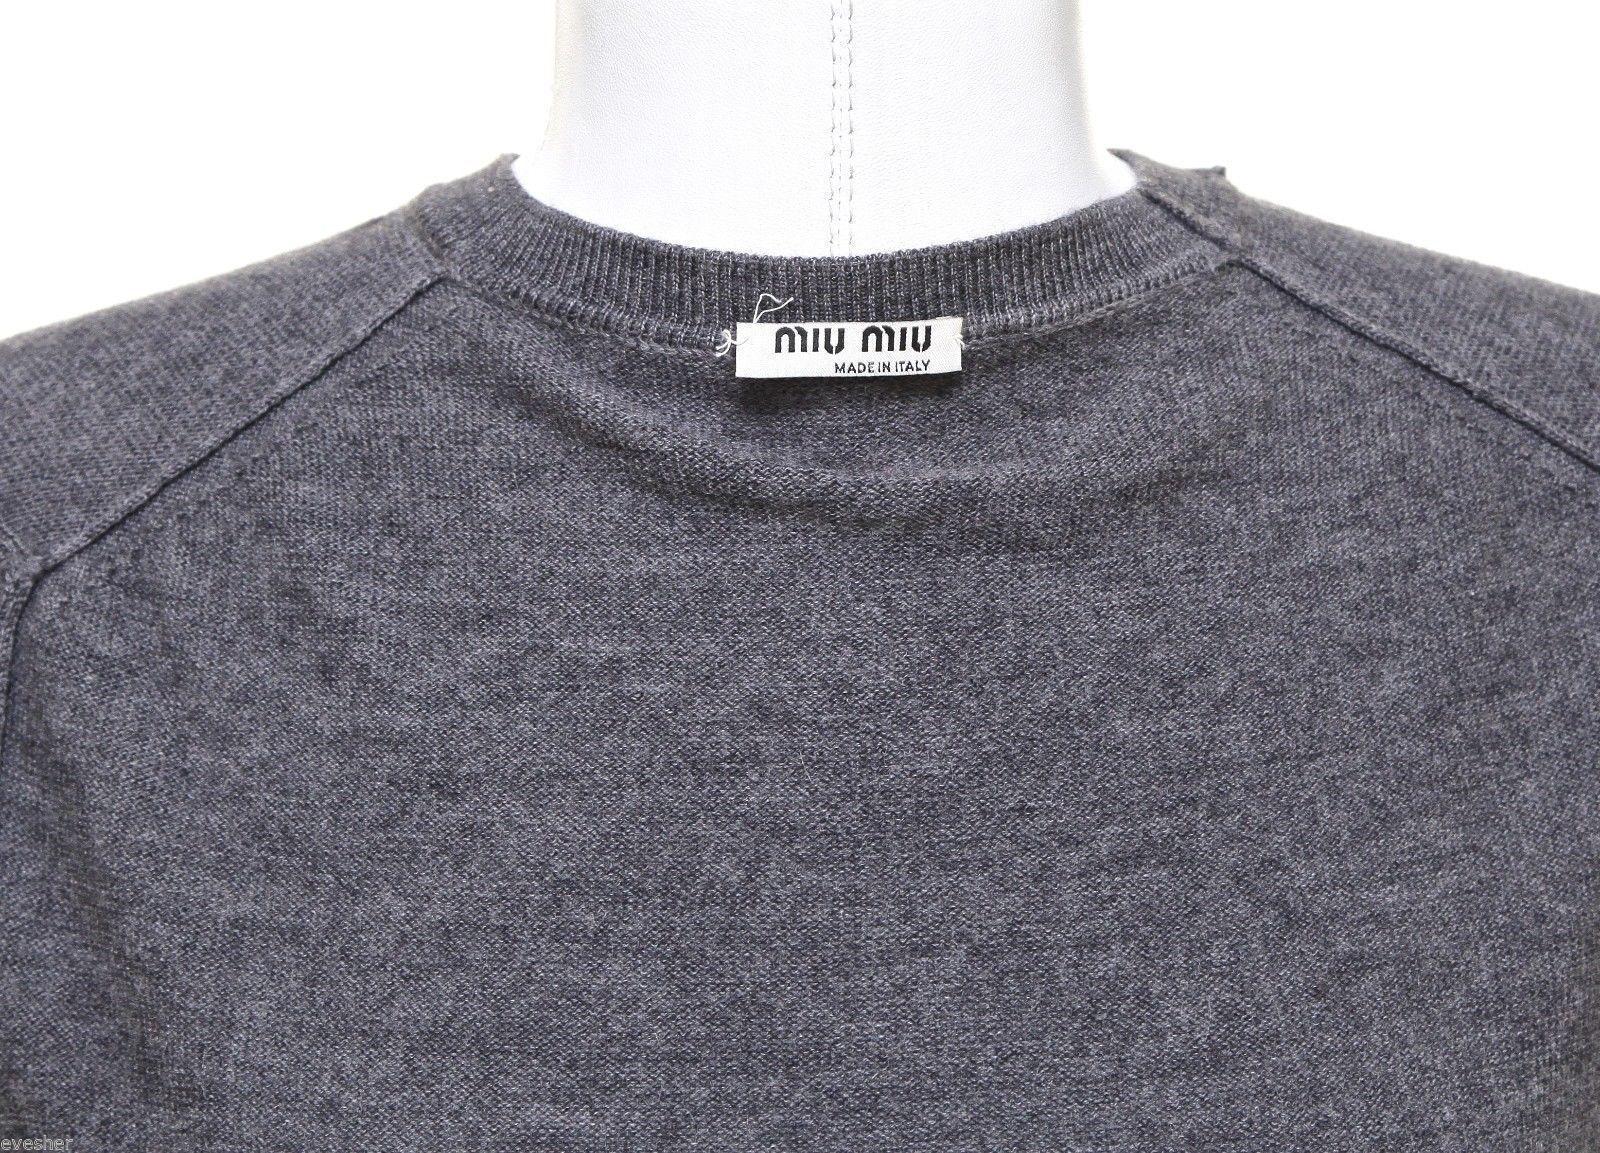 MIU MIU Top Sweater Knit Tunic Wool Grey Navy Silk Long Sleeve Sz 36 For Sale 1